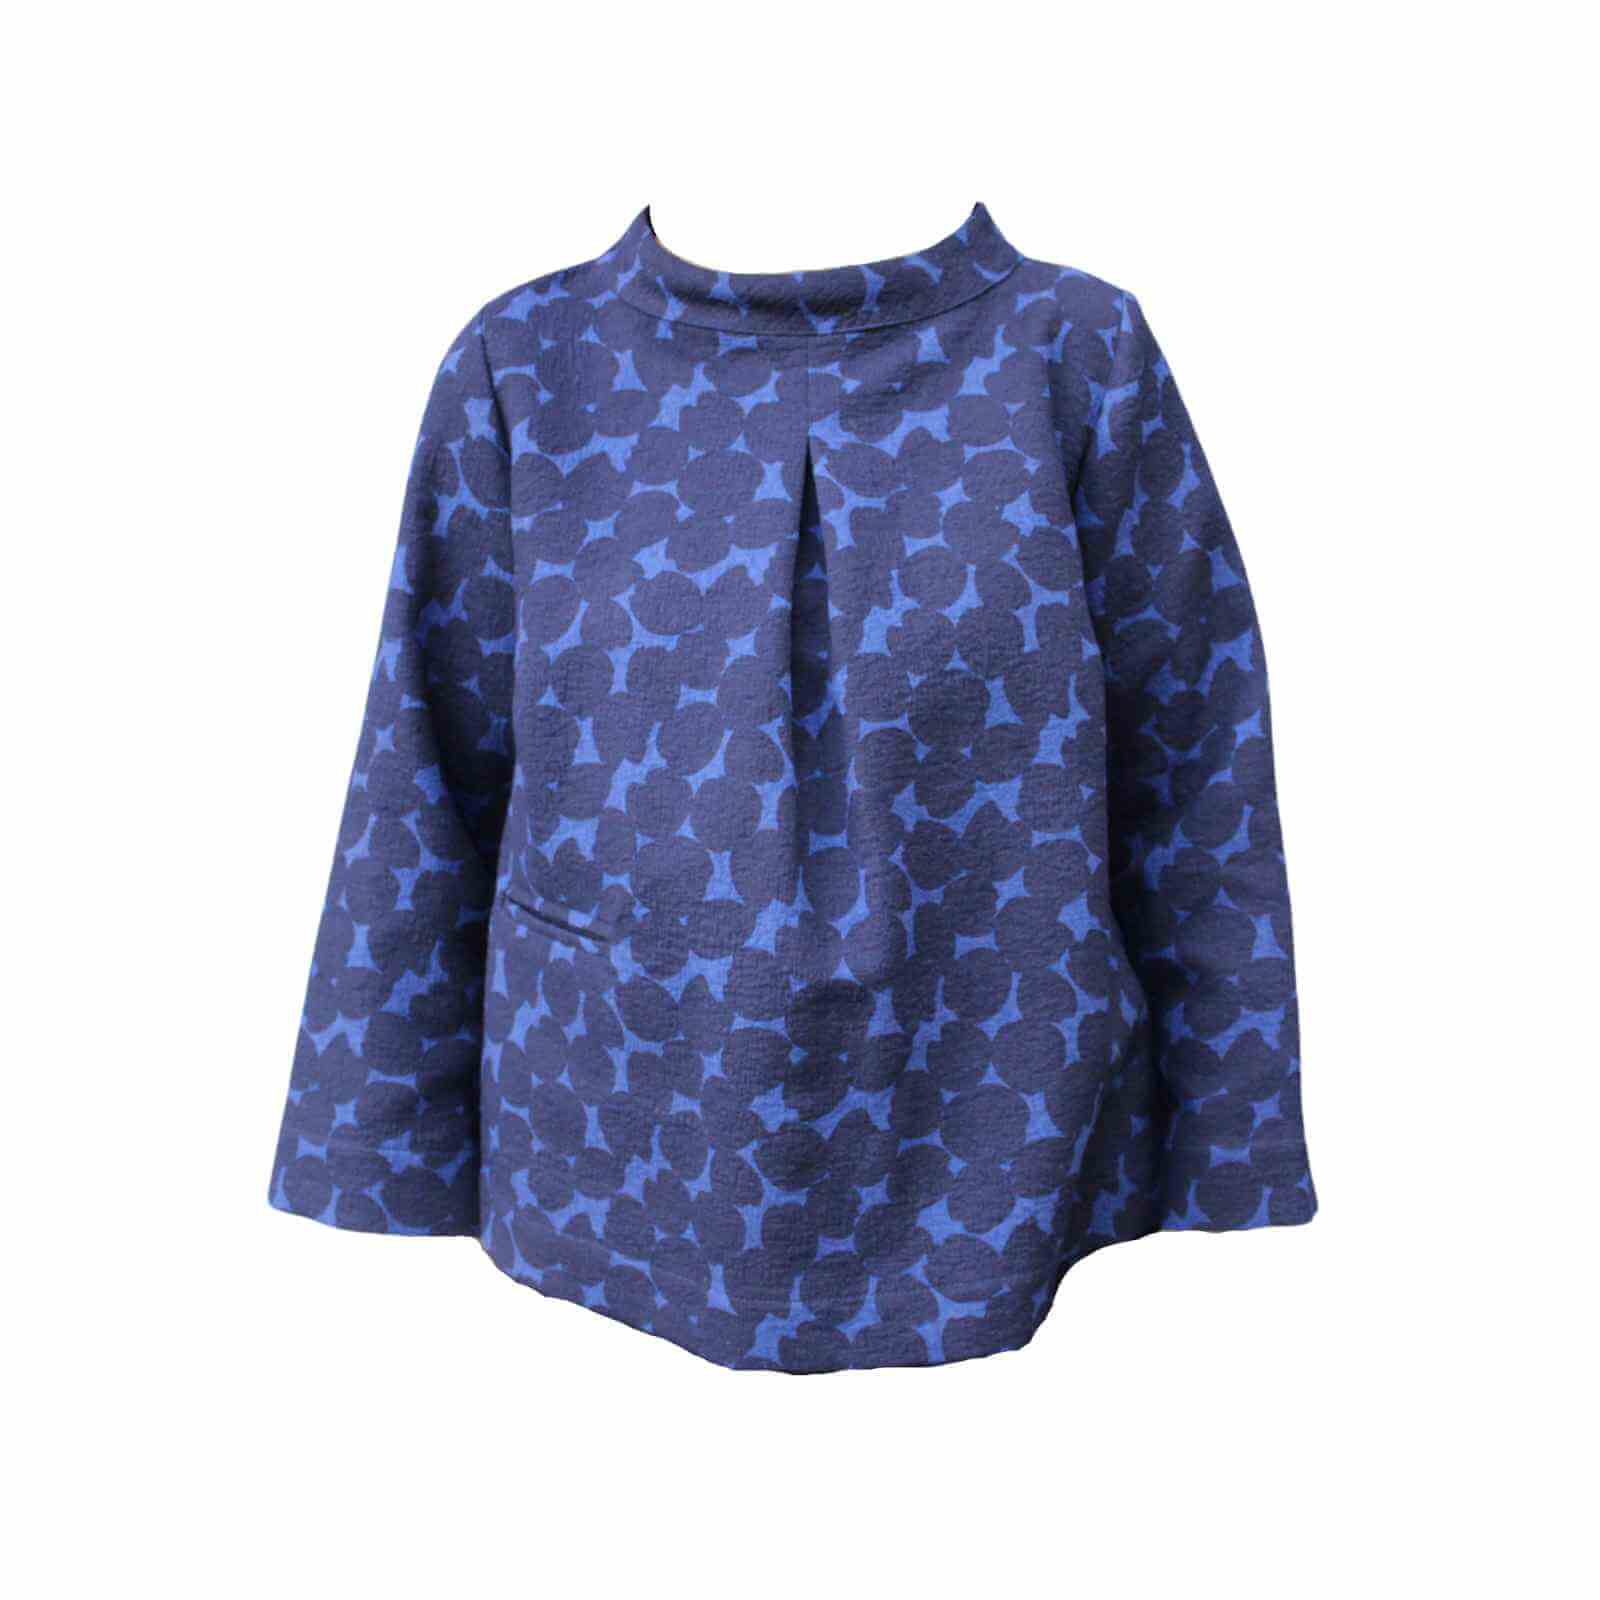 Koboltblå 60'er inspireret bluse med cirkler fra McVerdi